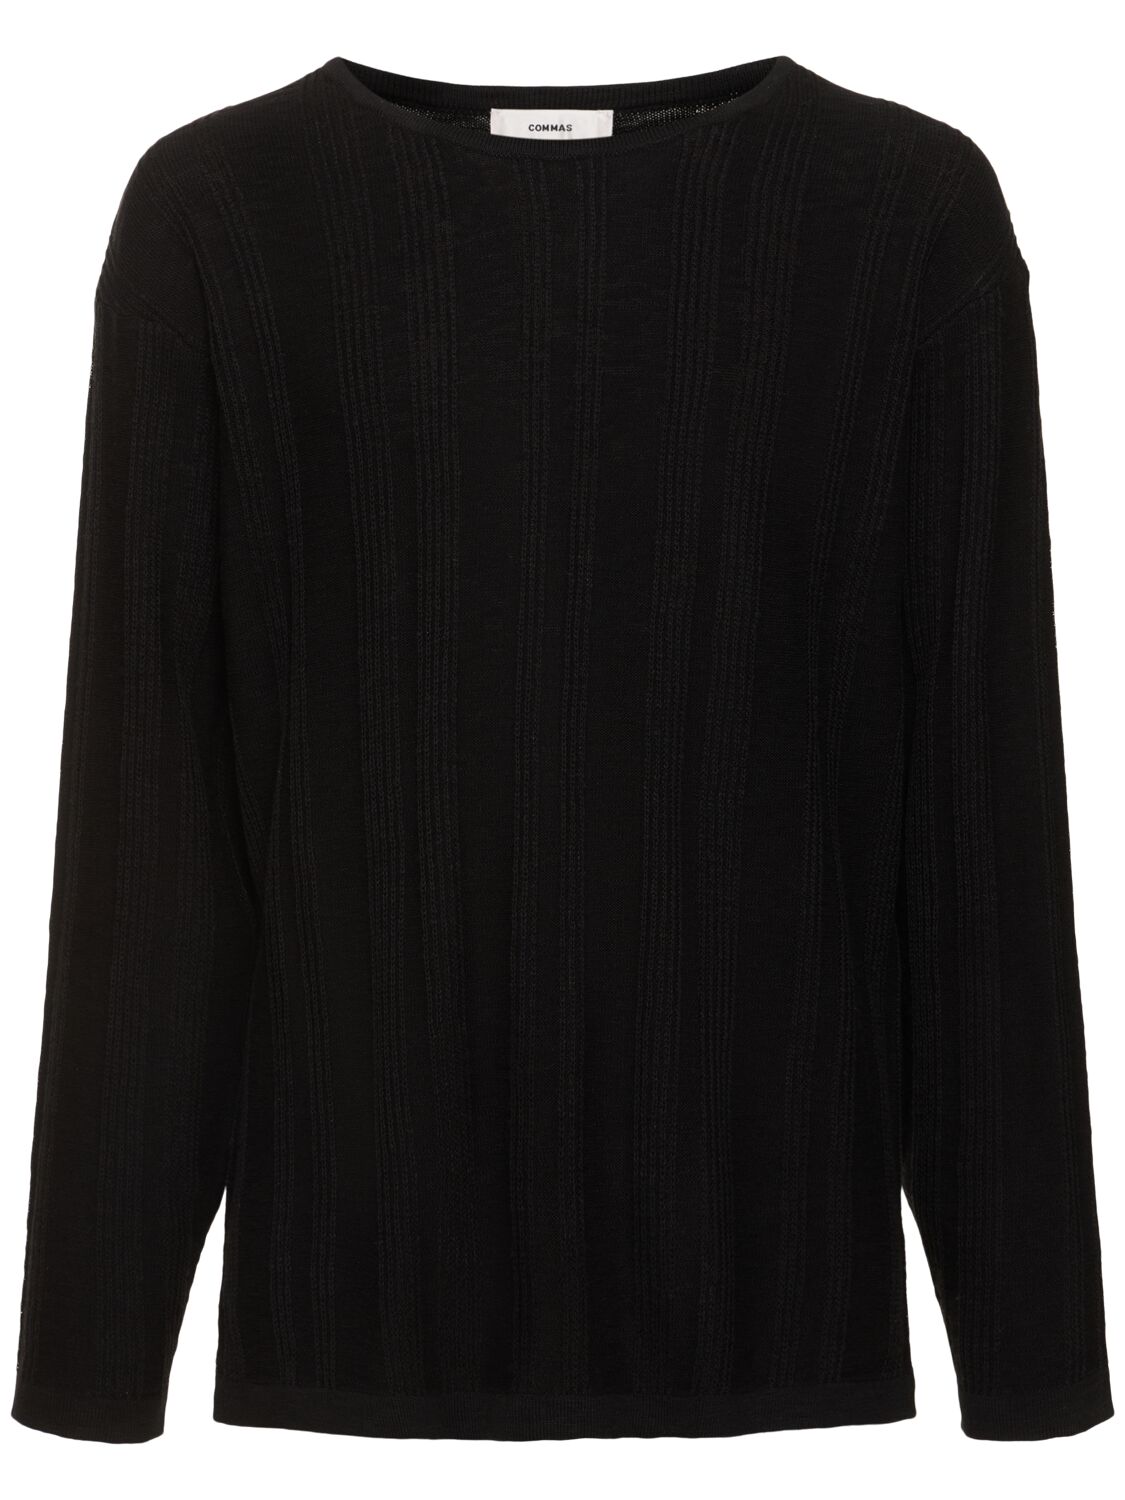 Commas Cotton Blend Sweater In Black